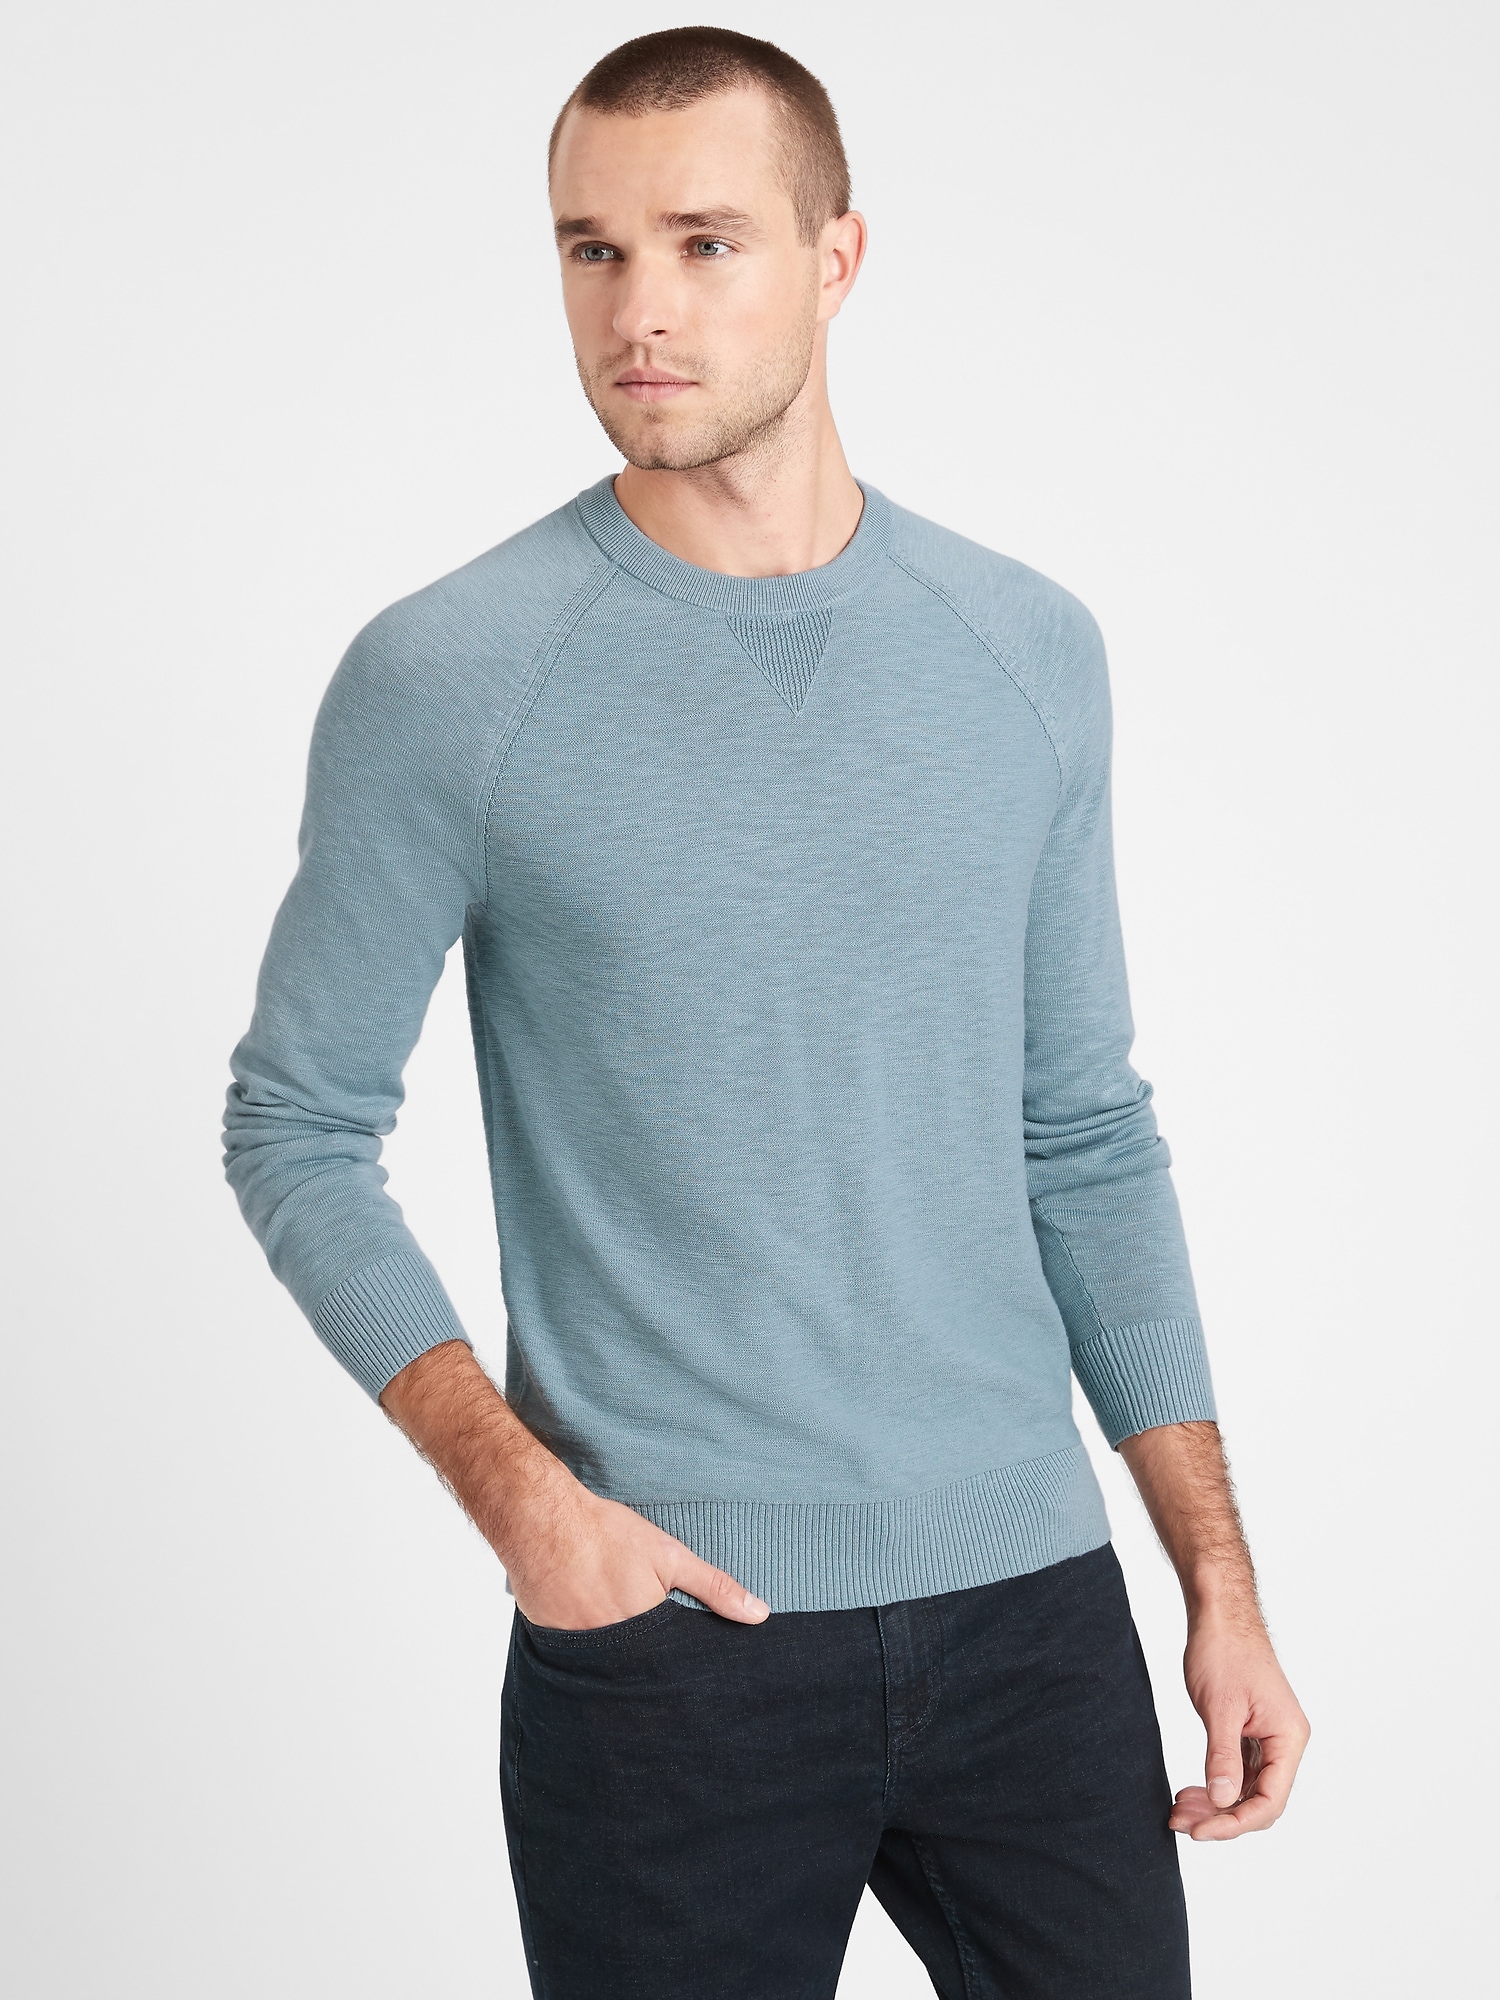 Organic Cotton Raglan Sweater